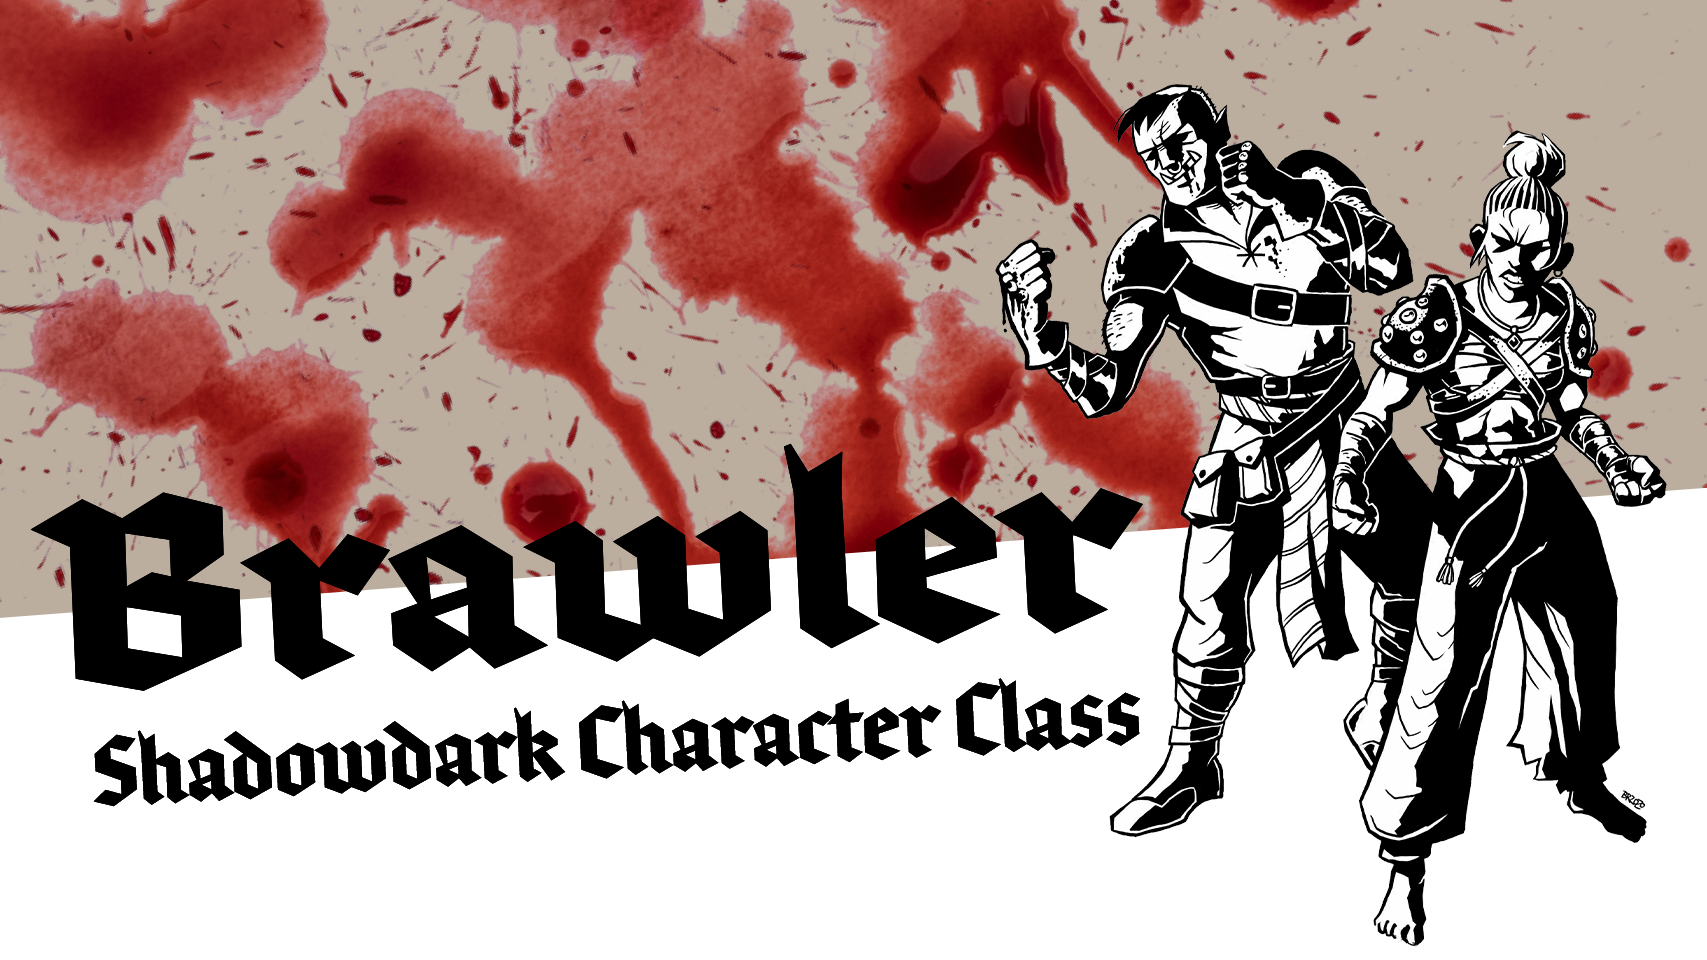 Brawler - Shadowdark Character Class